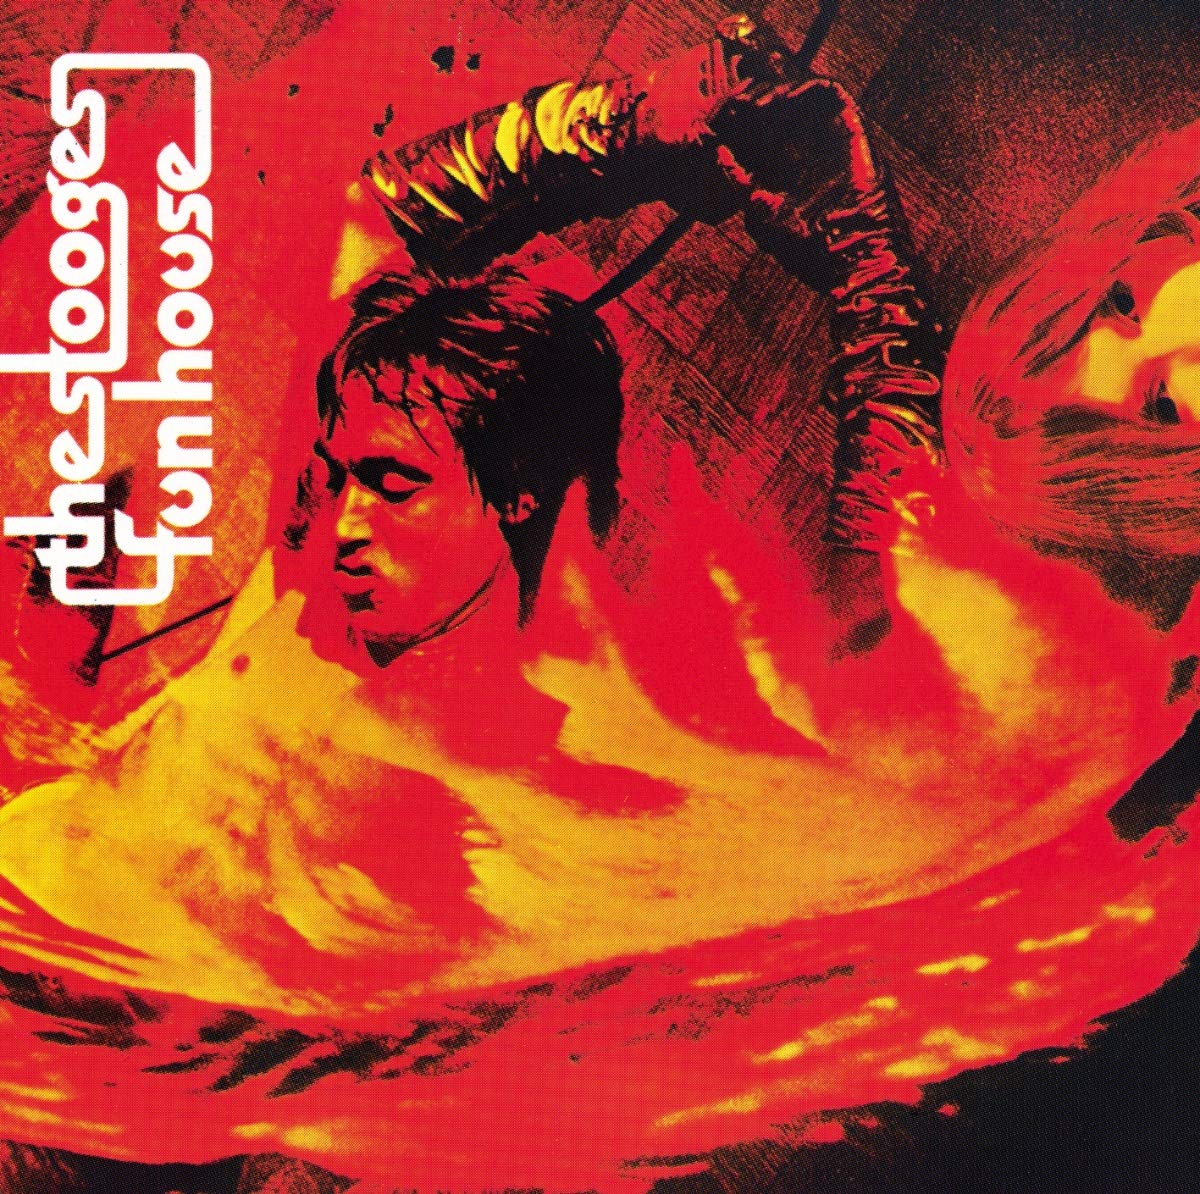 The Stooges - Fun House LP (Rocktober 2022 Edition, Half Red/Half Black Vinyl)